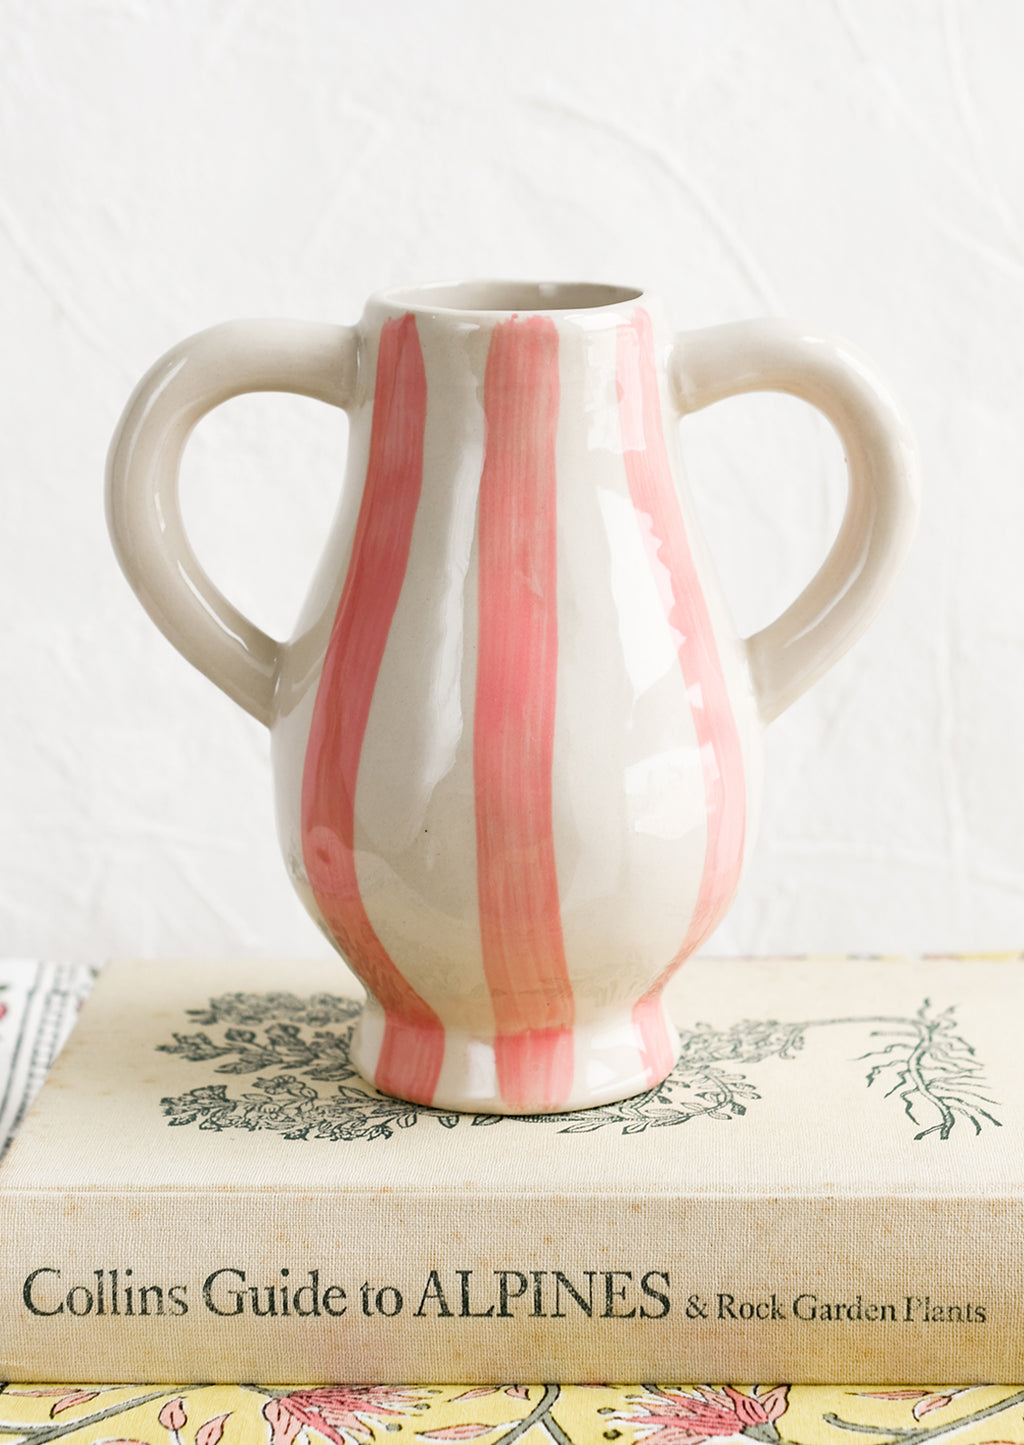 Pink Stripe: A ceramic vase in pink stripe pattern with side handle detail.